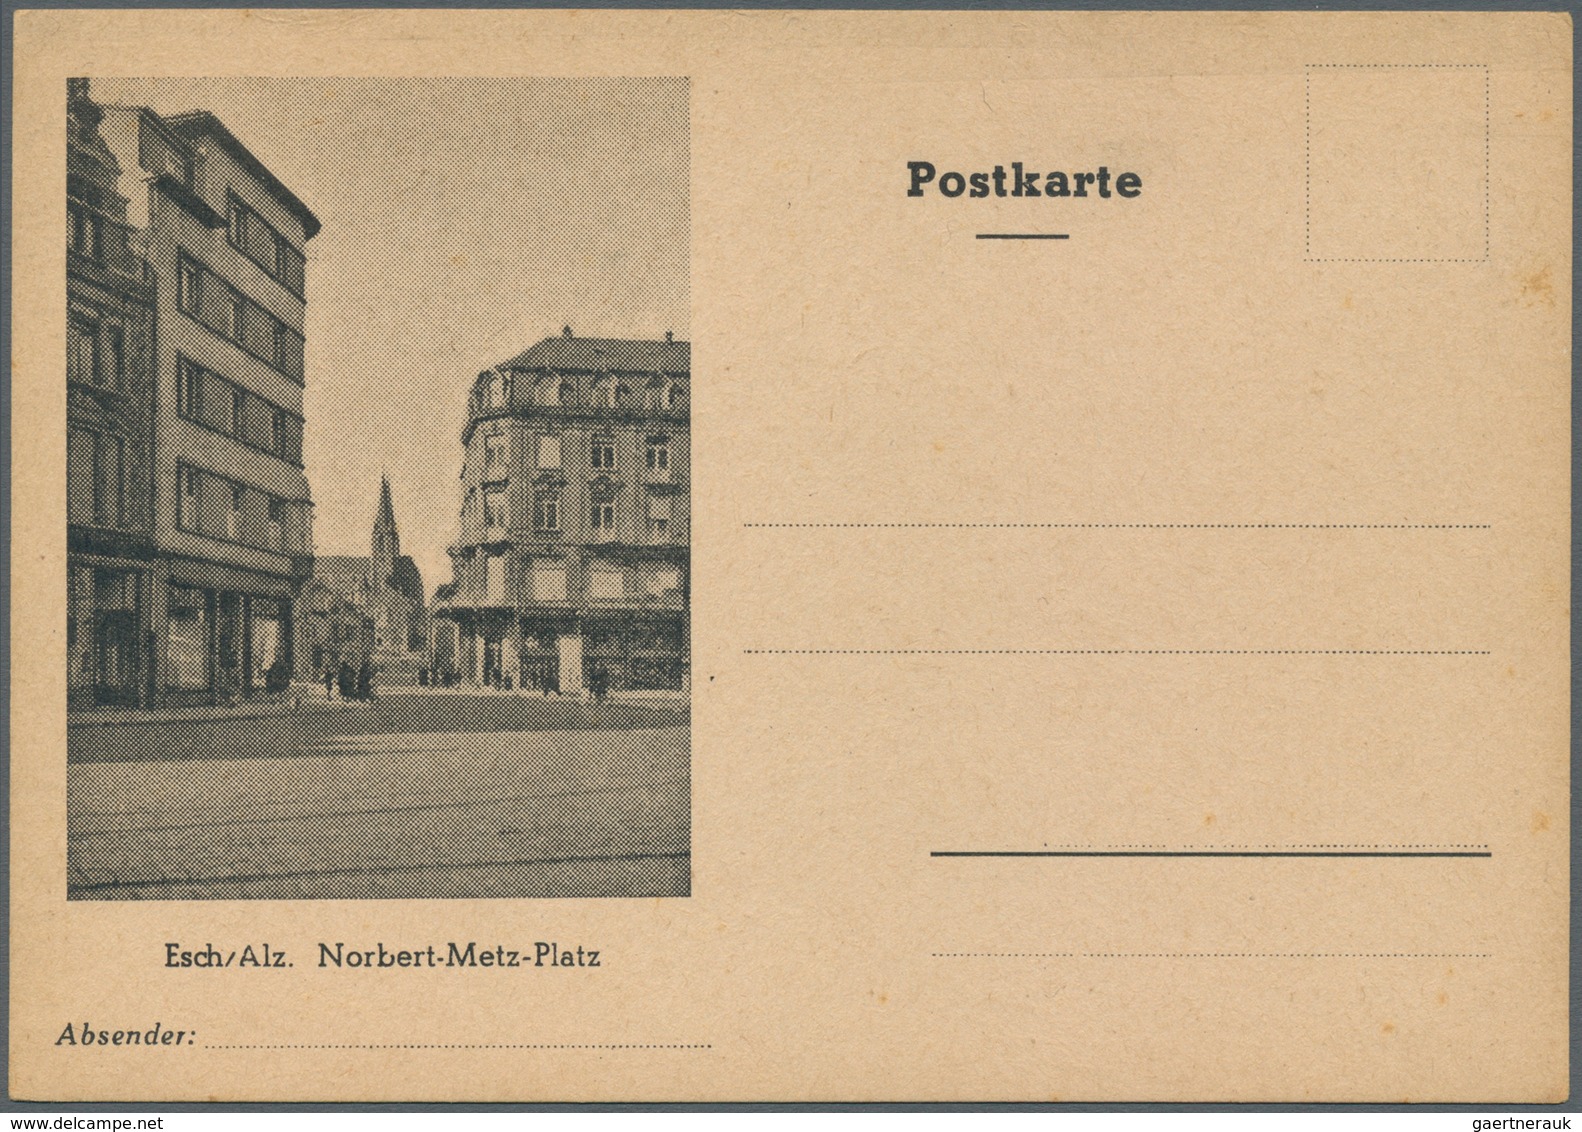 15155 Luxemburg - Ganzsachen: 1940 (ca.), Essay Picture Card Without Value Stamp, Five Cards With Differen - Ganzsachen